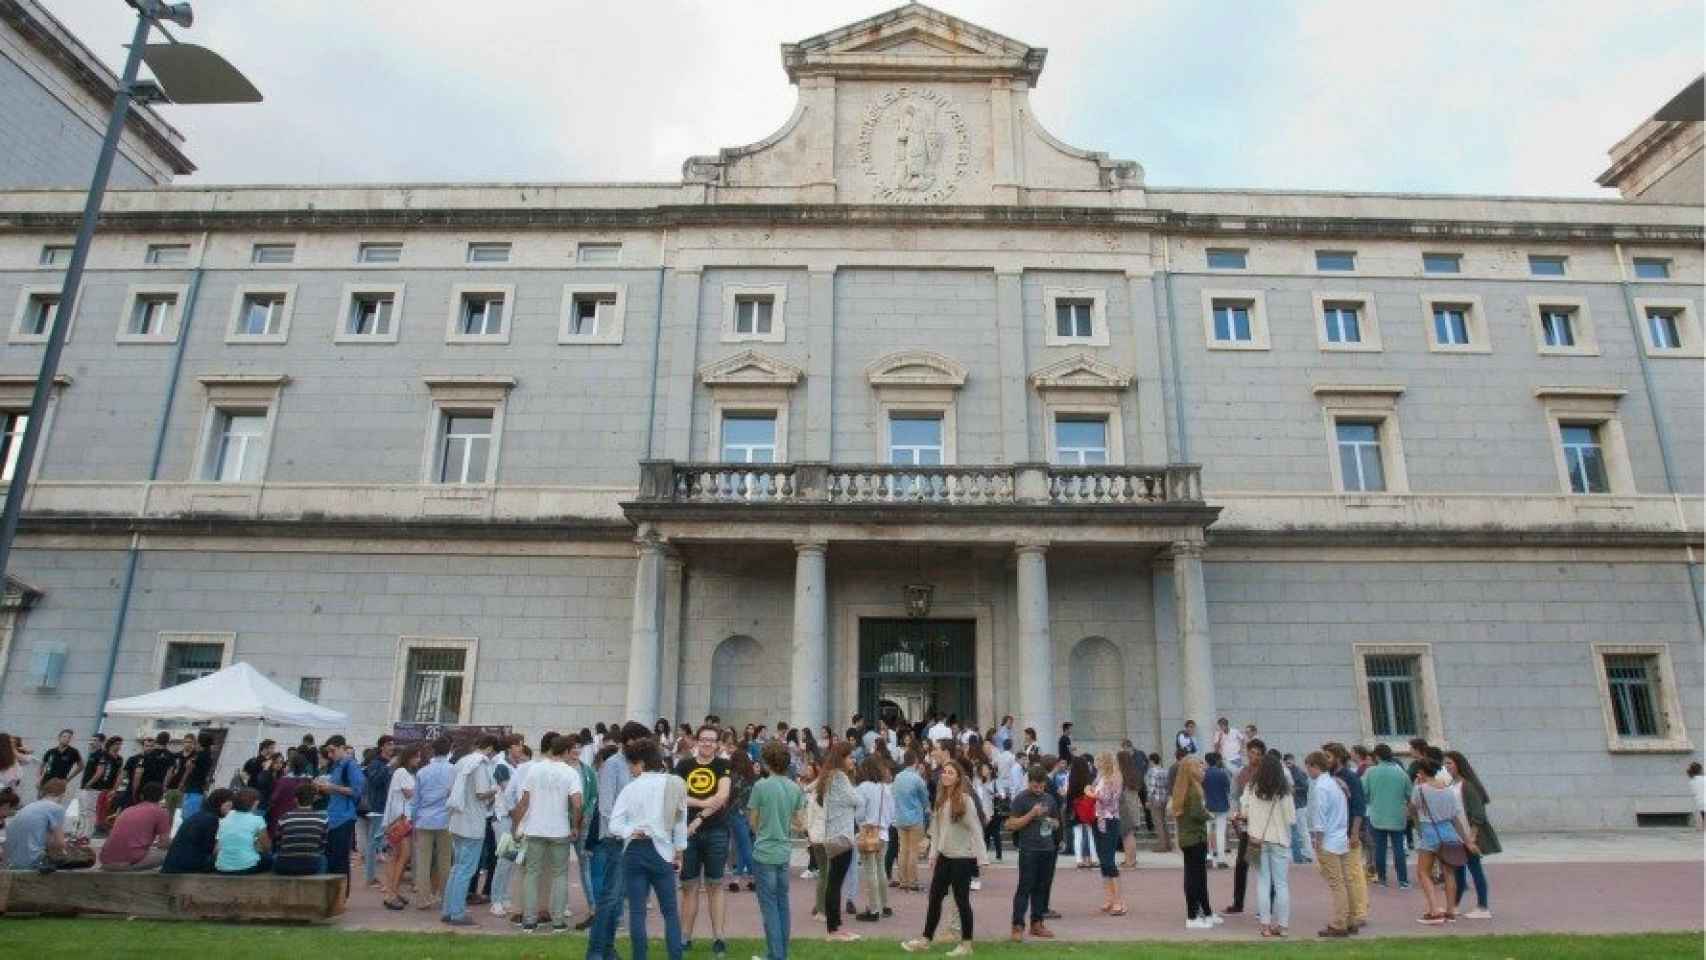 Resumen - Universidad de Navarra